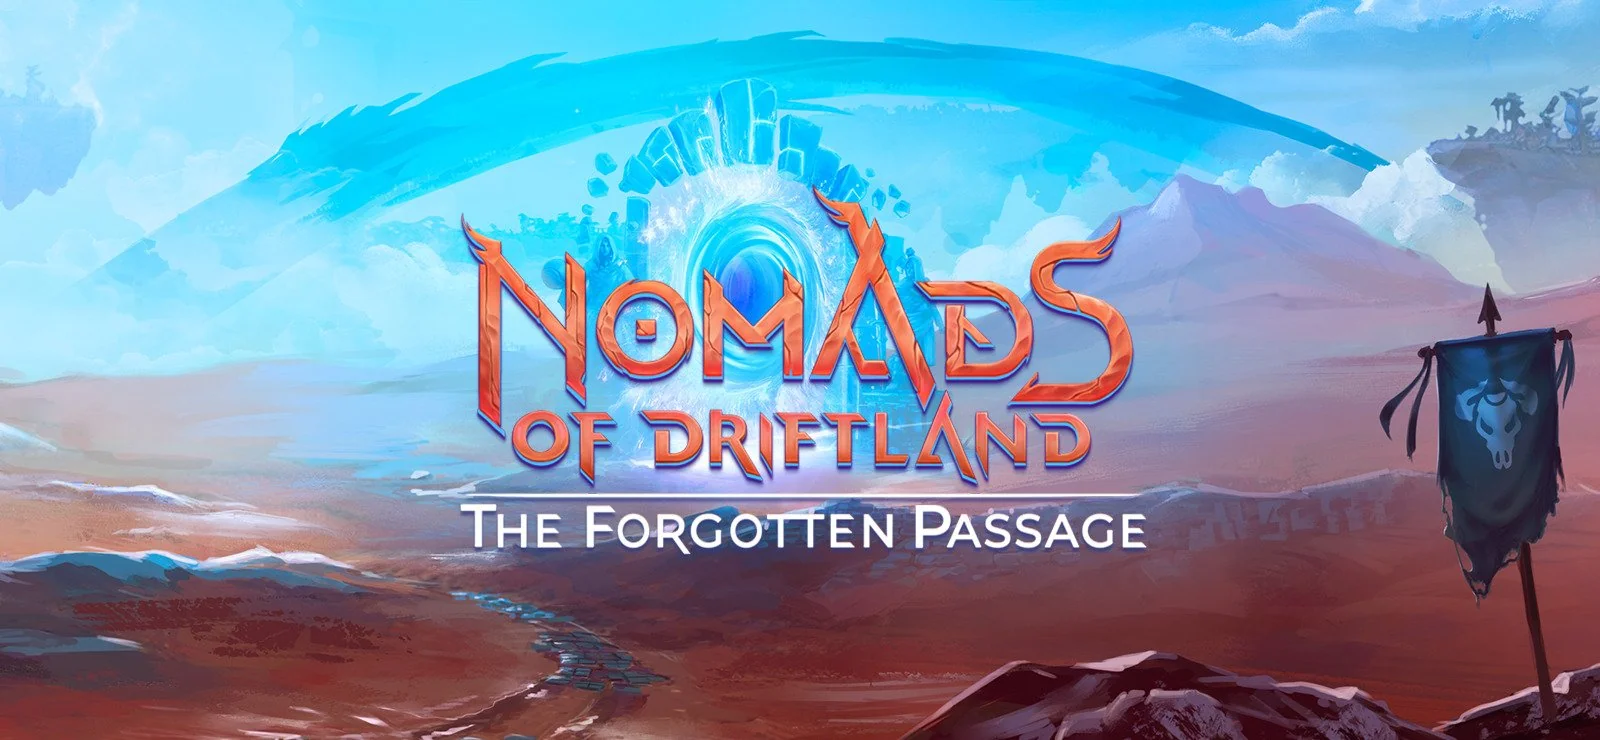 Nomads of Driftland: The Forgotten Passage